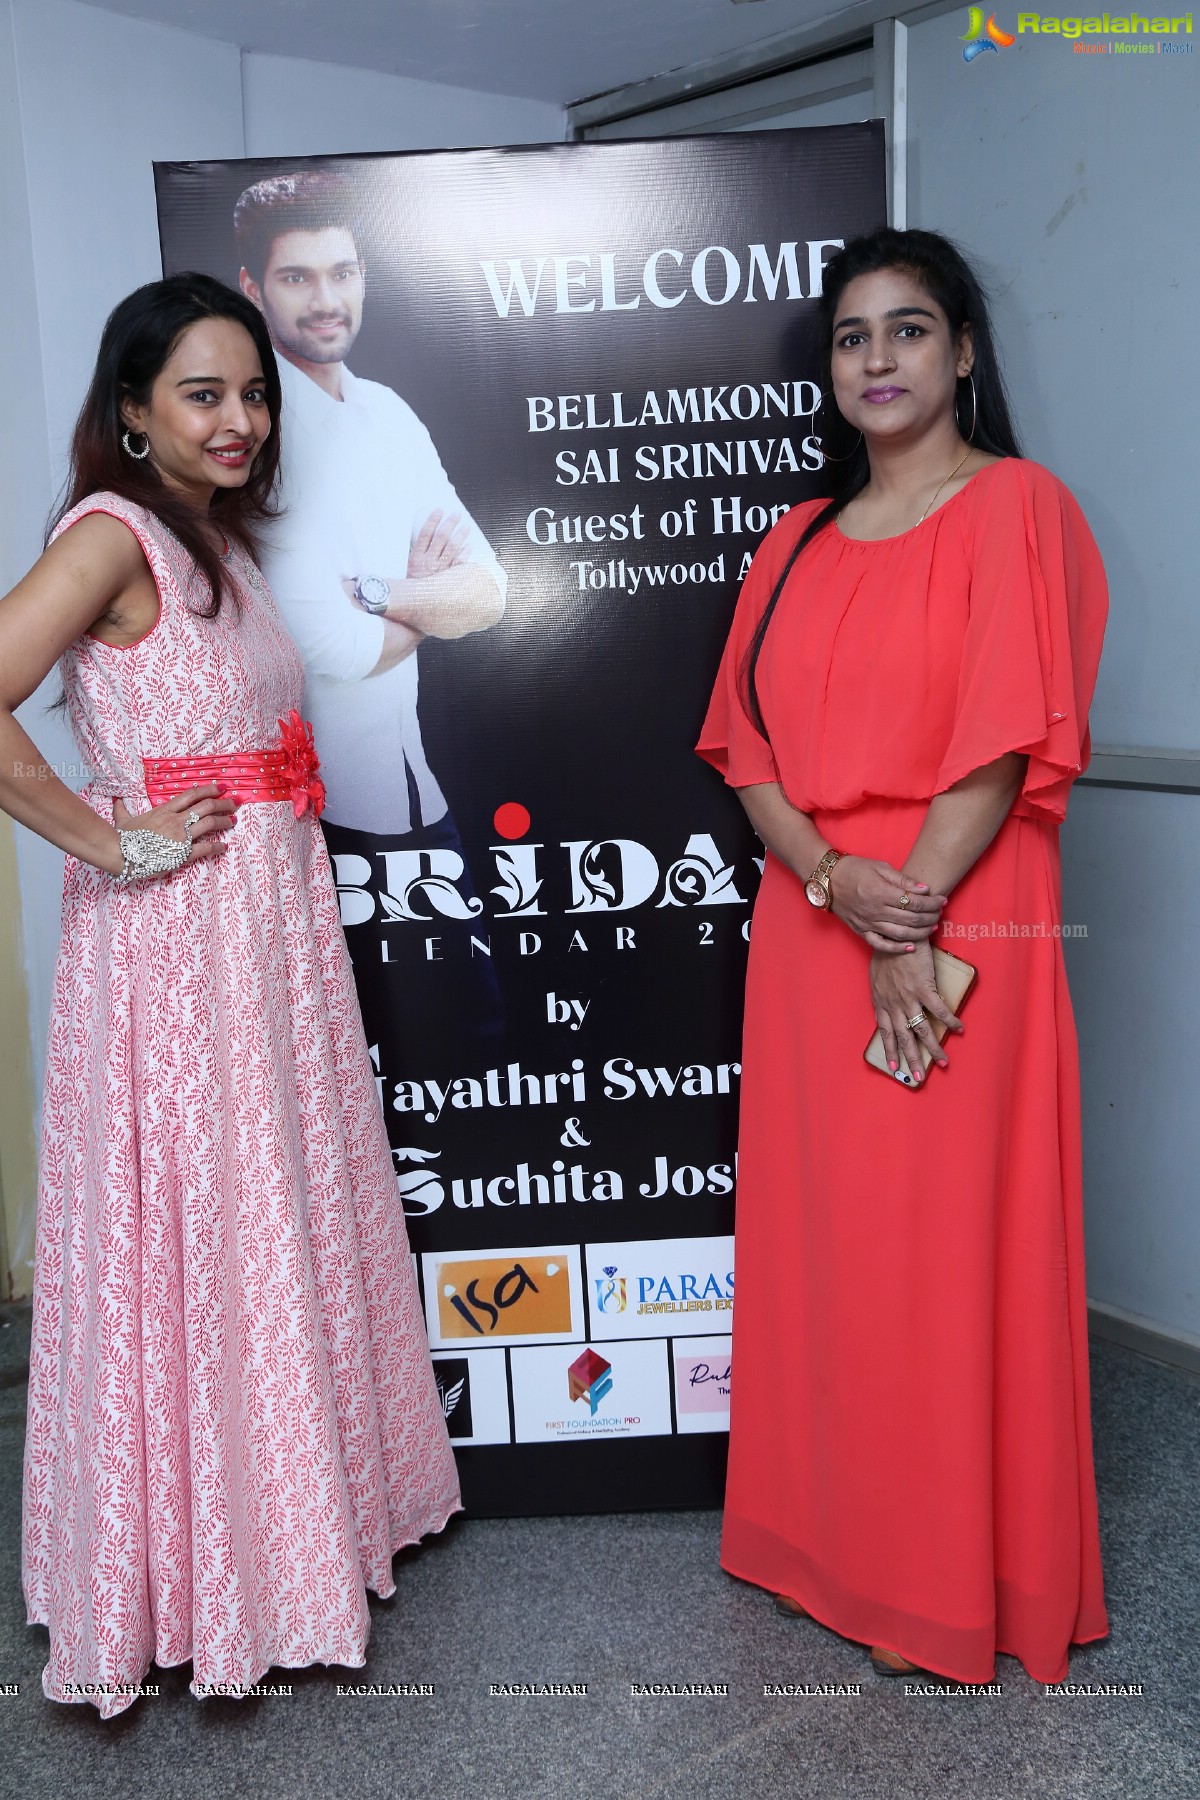 Bridal Calendar 2019 Launched by Actor Srinivas Bellamkonda